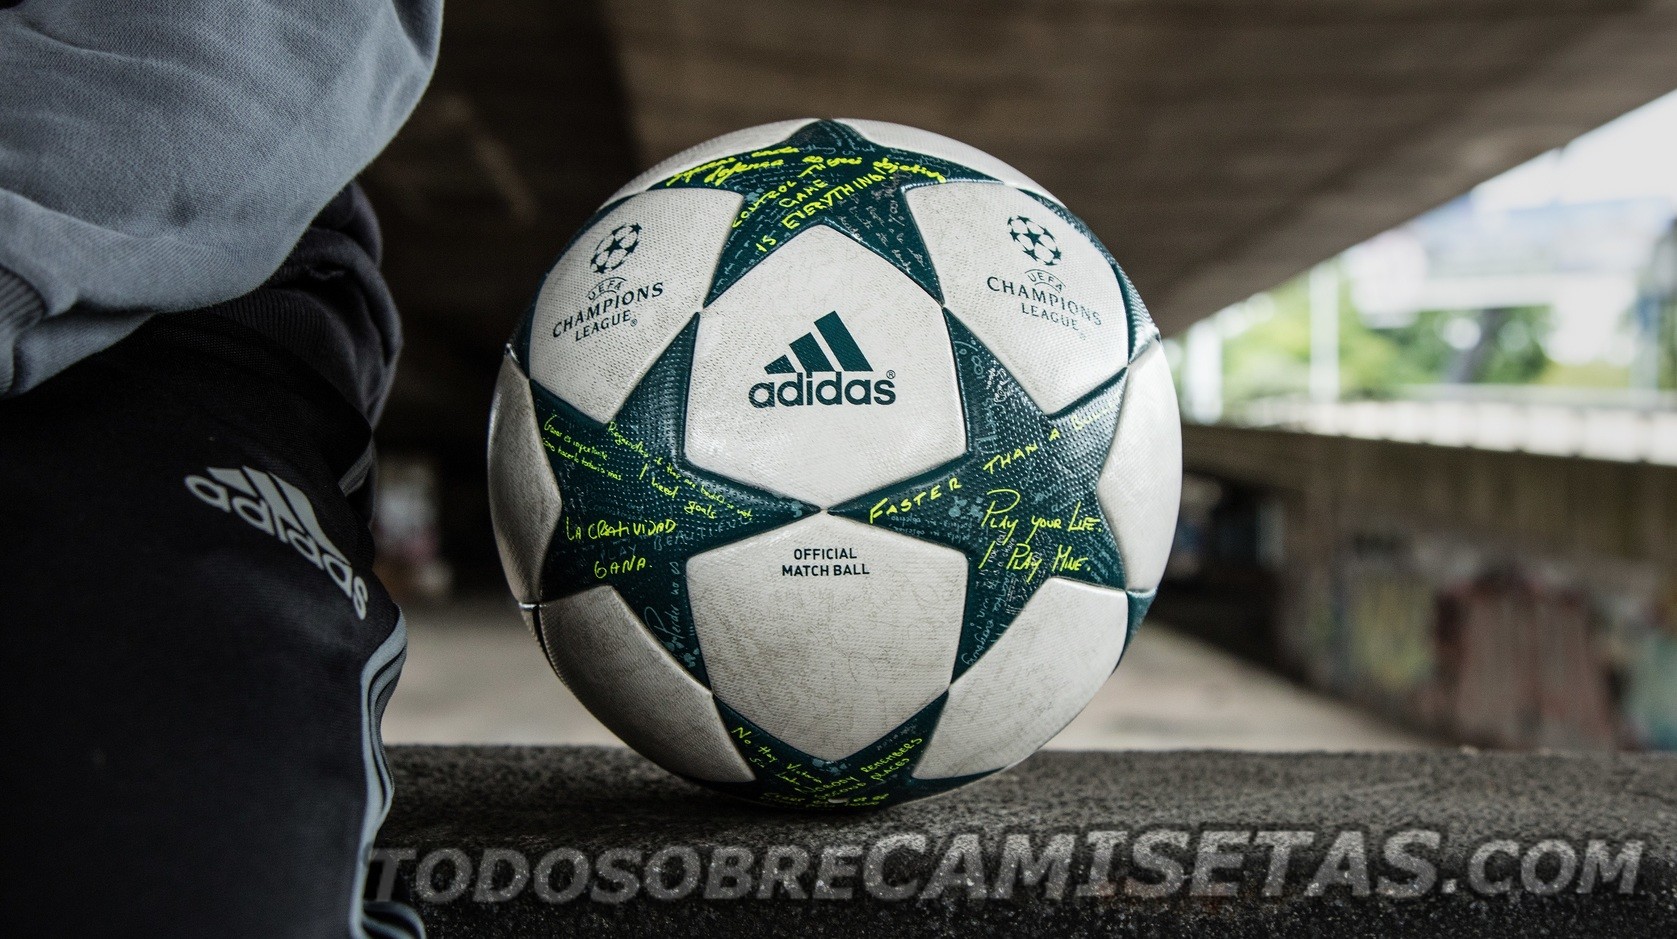 Adidas Champions League 2016-17 ball